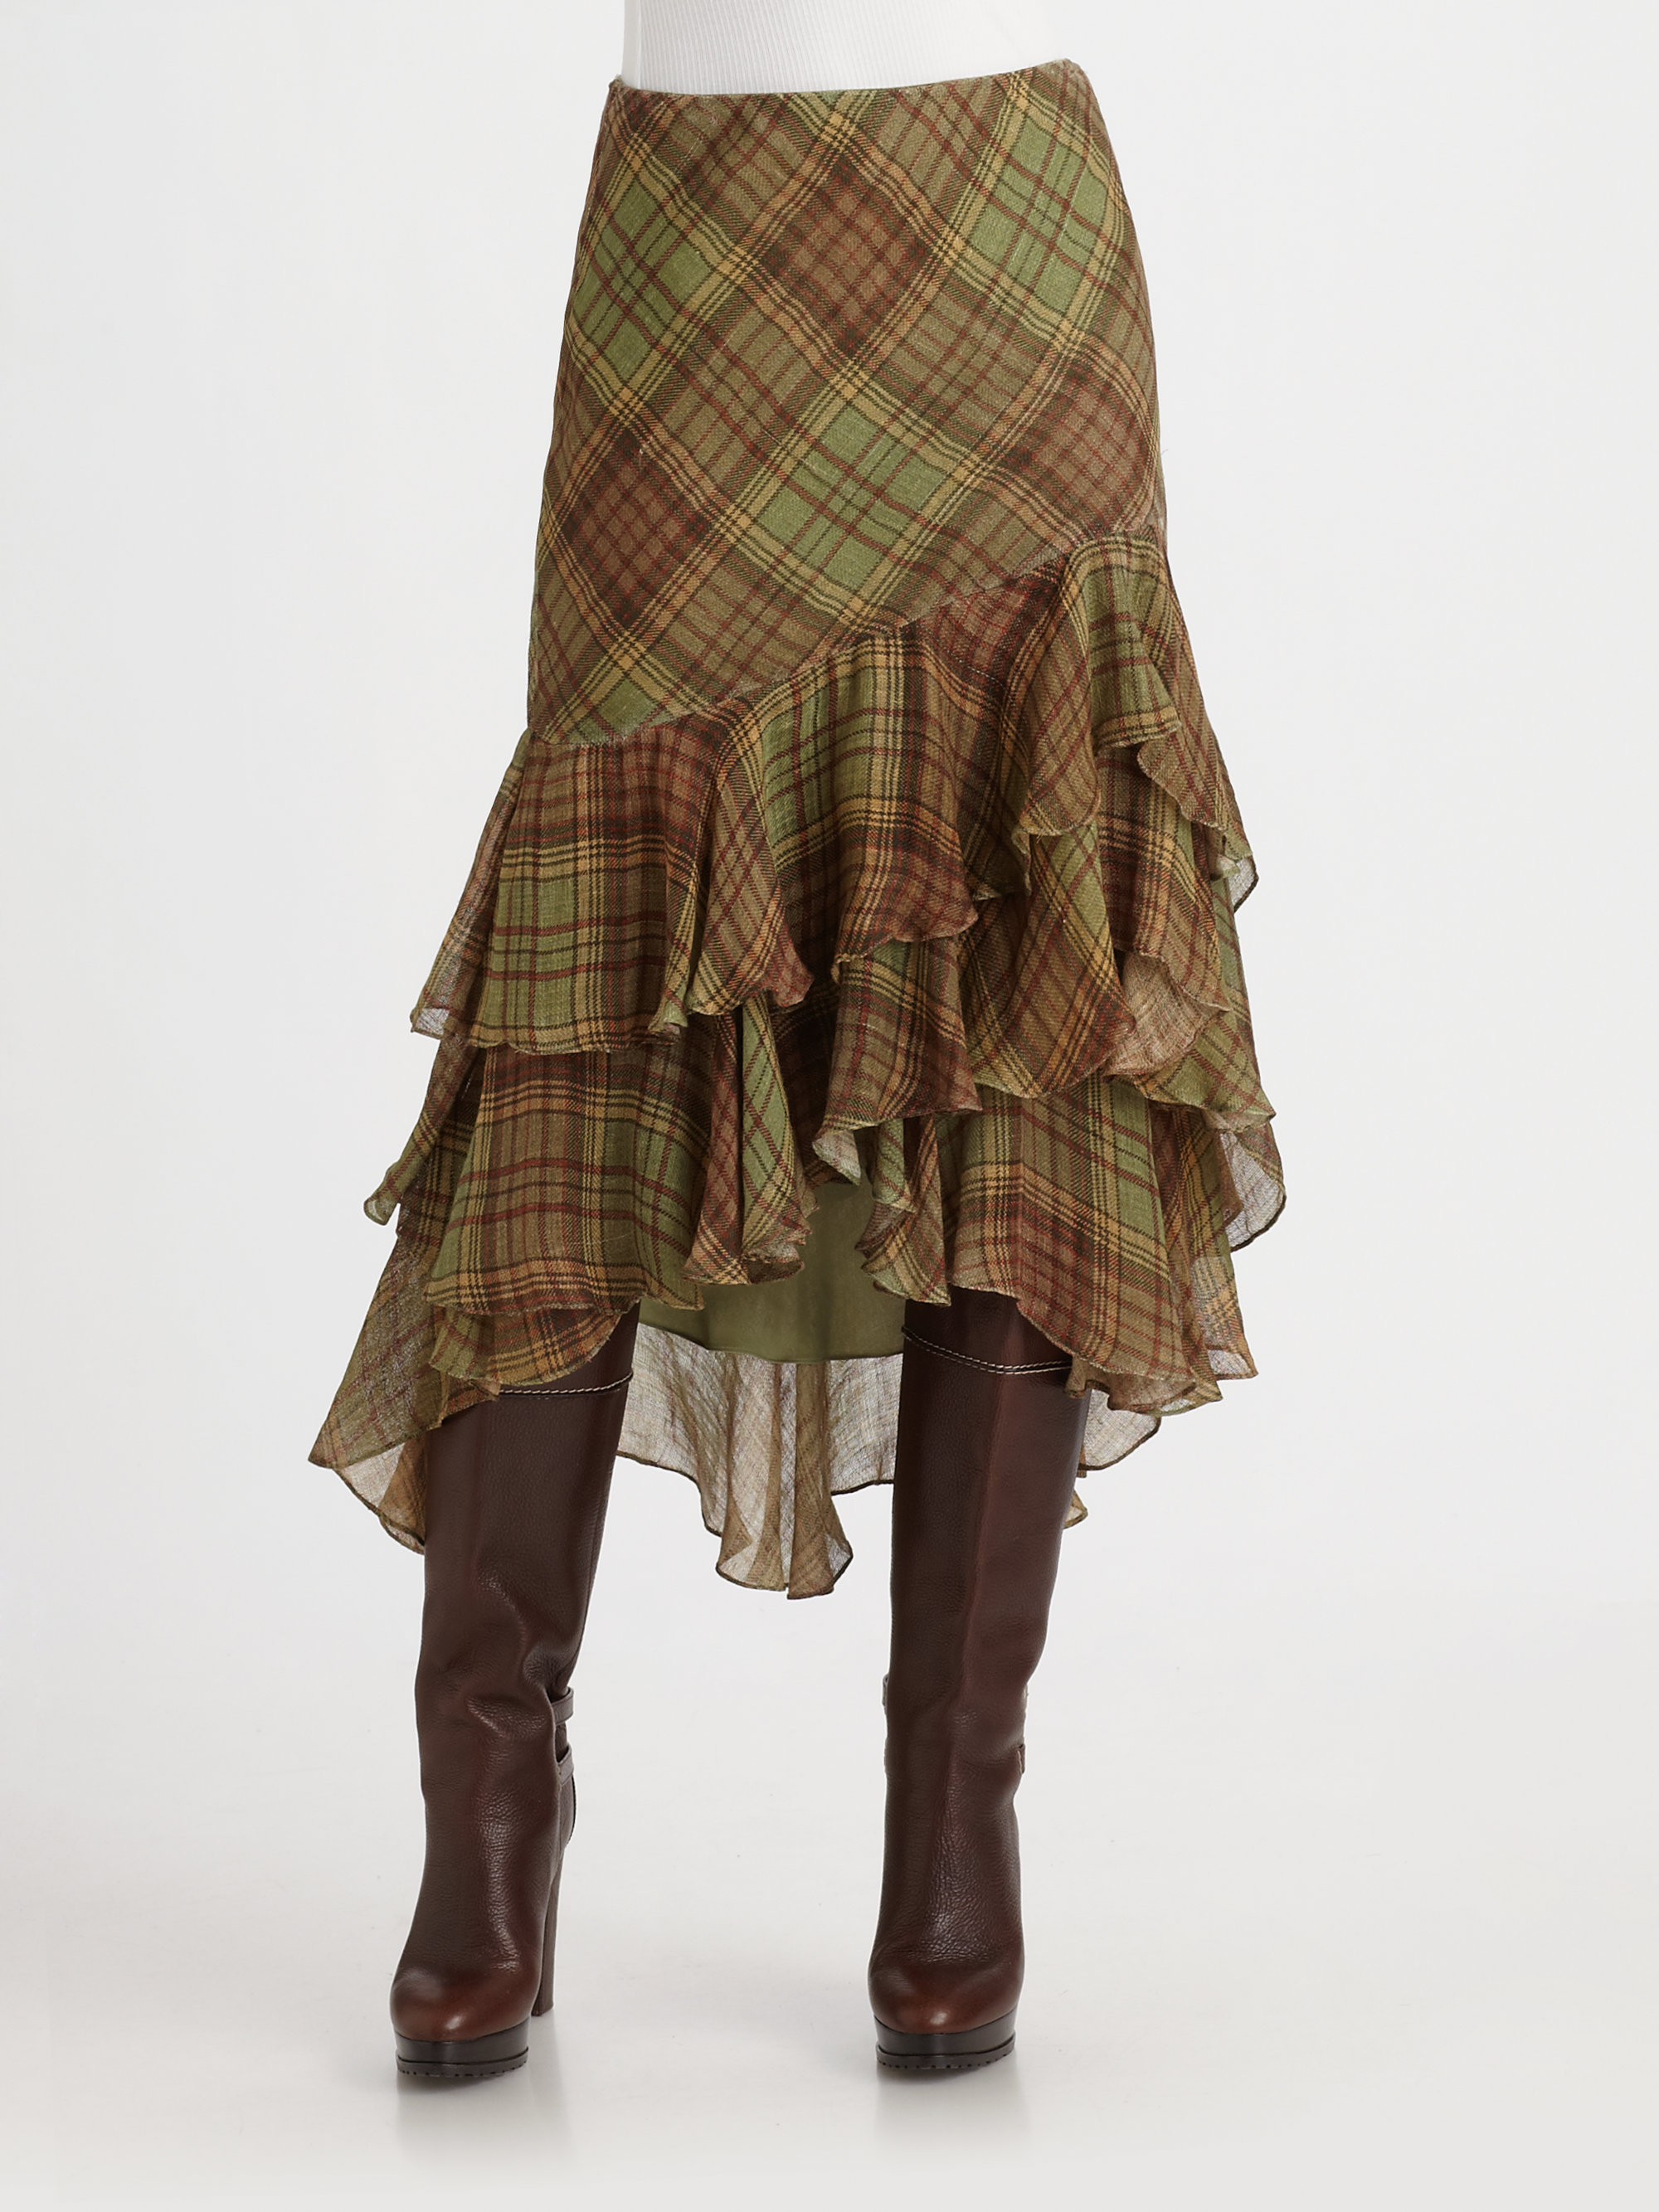 Lyst - Ralph Lauren Blue Label Plaid Linen Skirt in Brown